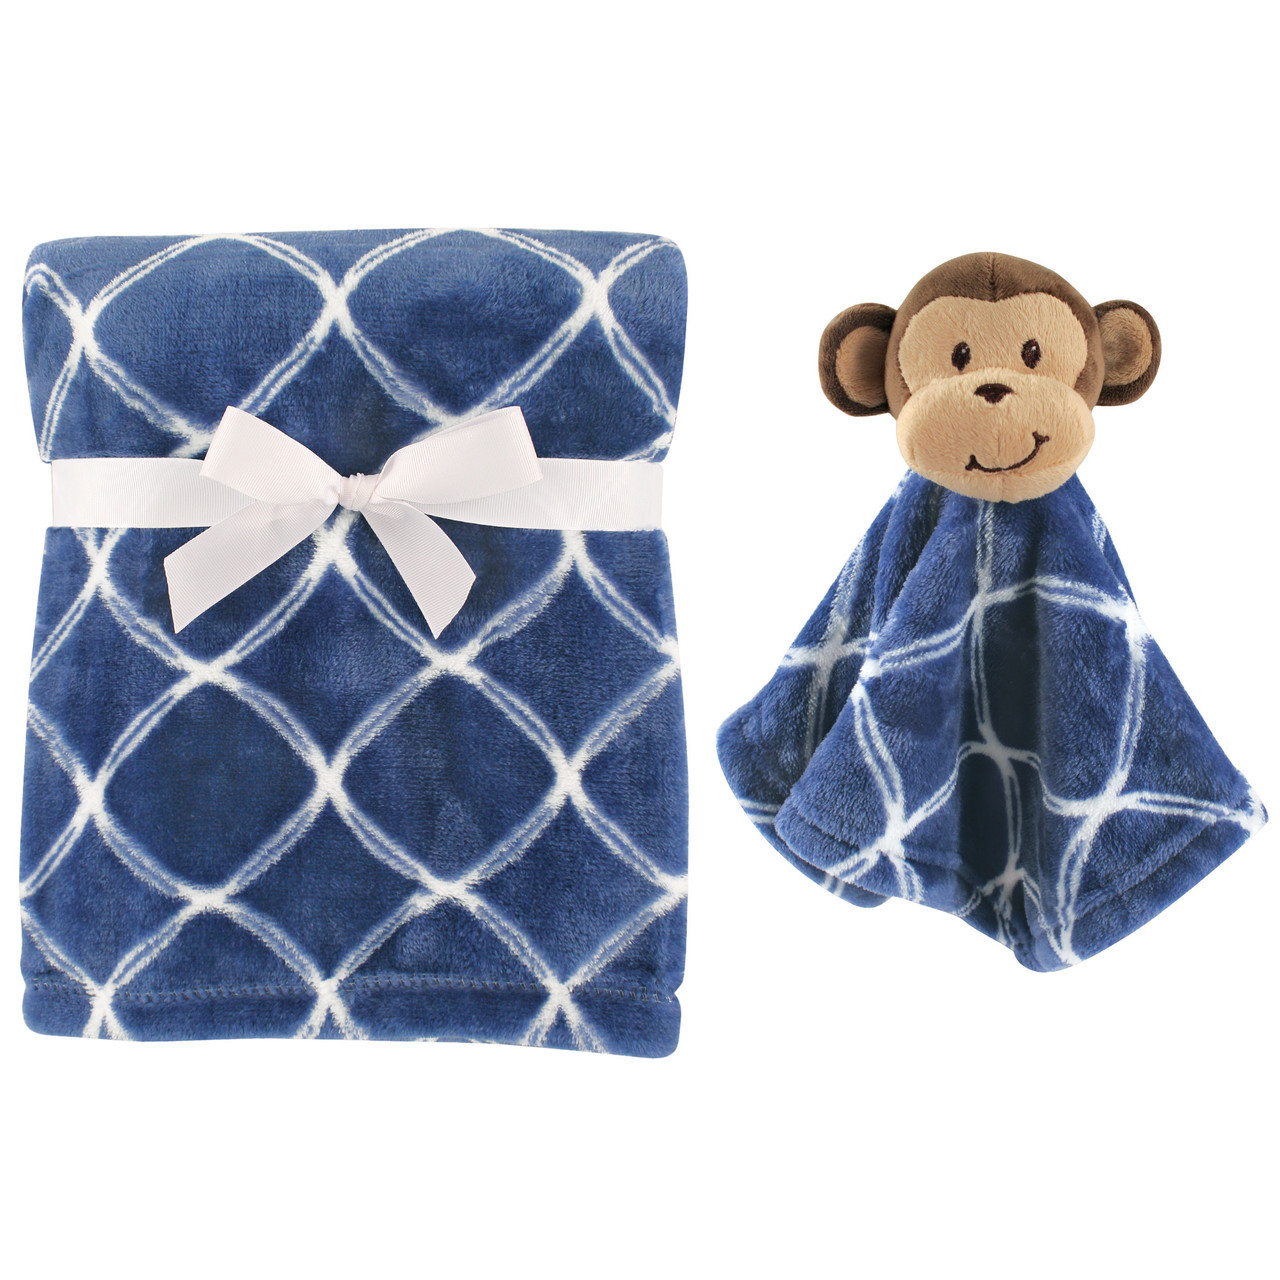 Hudson Baby Plush Blanket And Animal Security Blanket